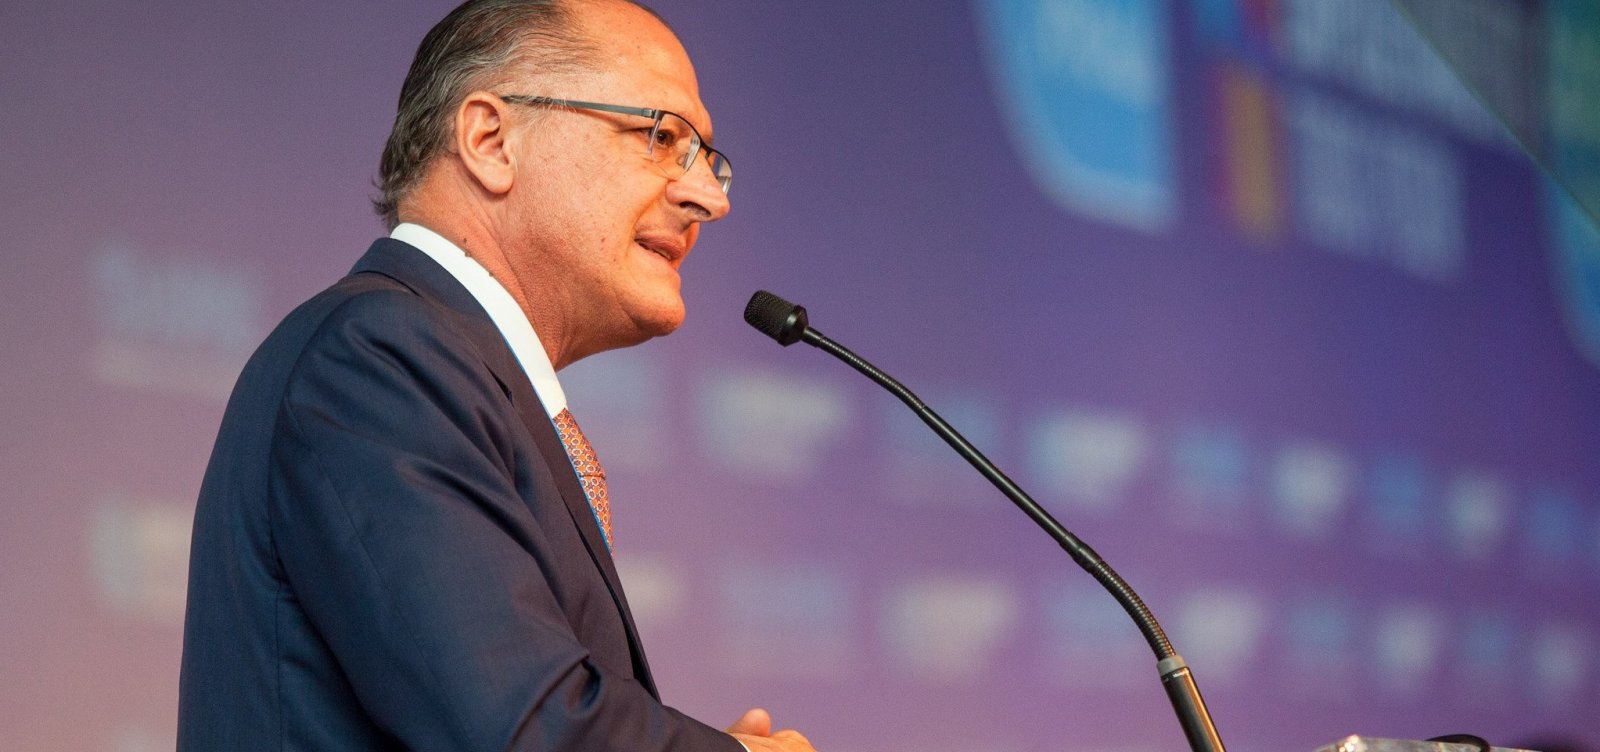 Alckmin cogitou desistir de candidatura a presidente, diz coluna